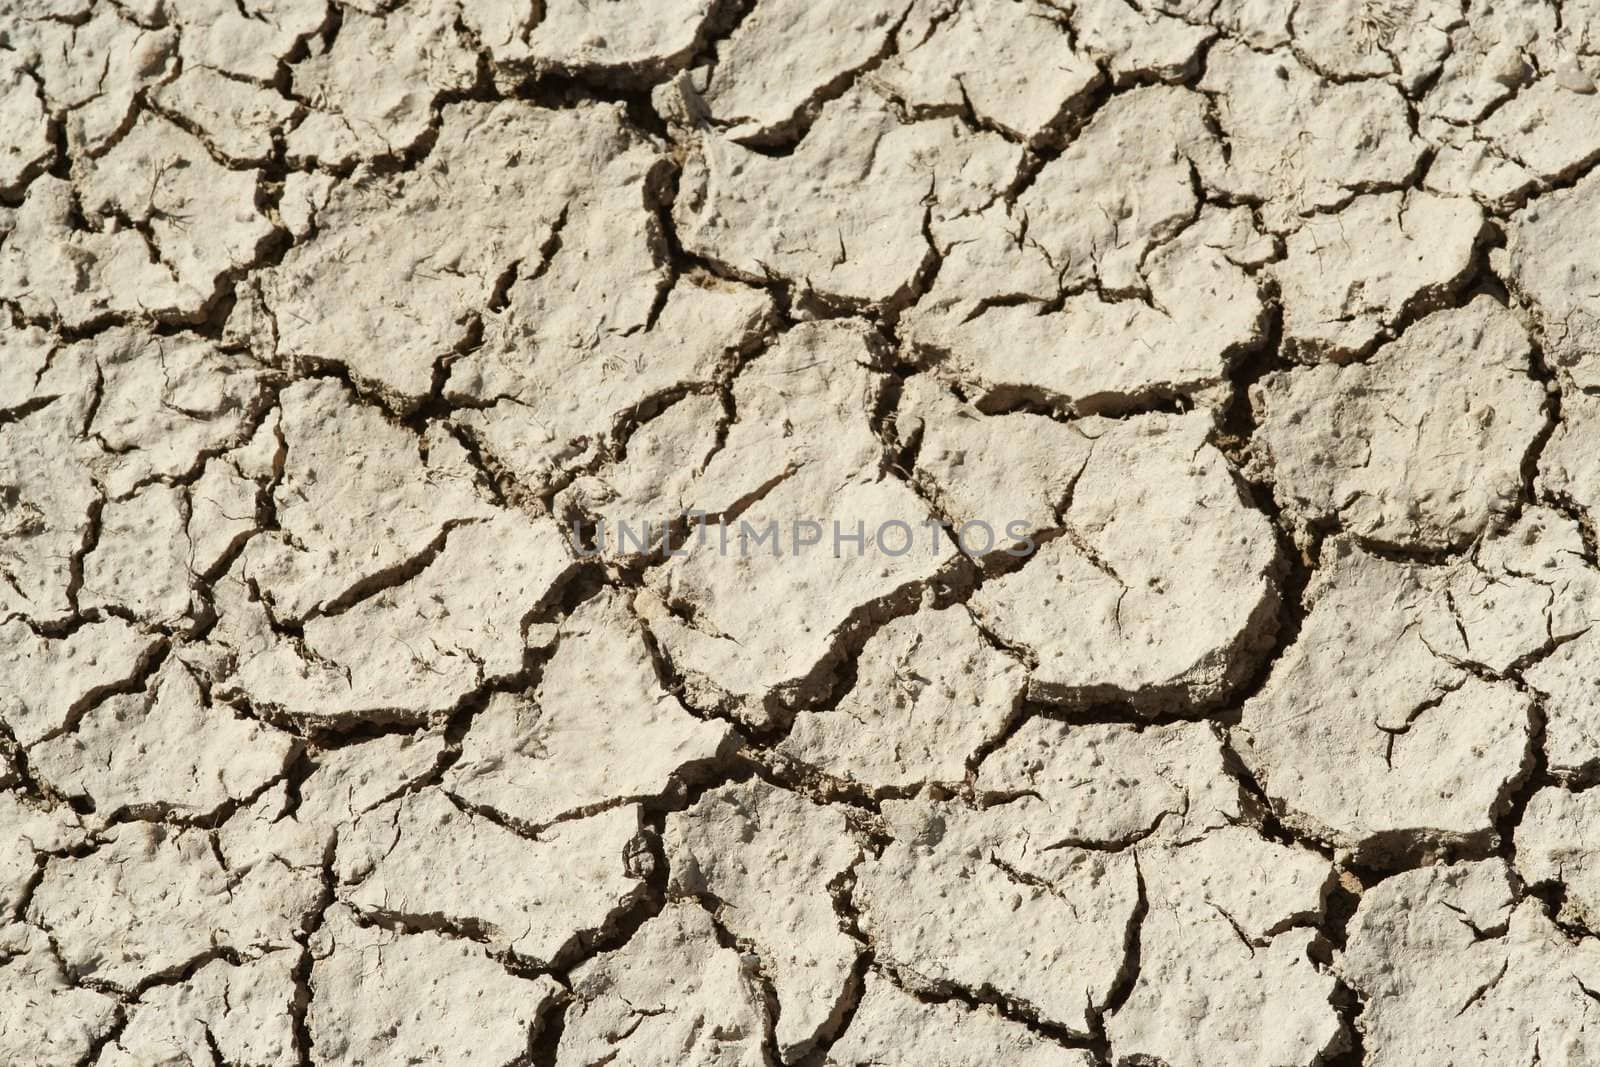 Dry Mud Cracks by Alvinge